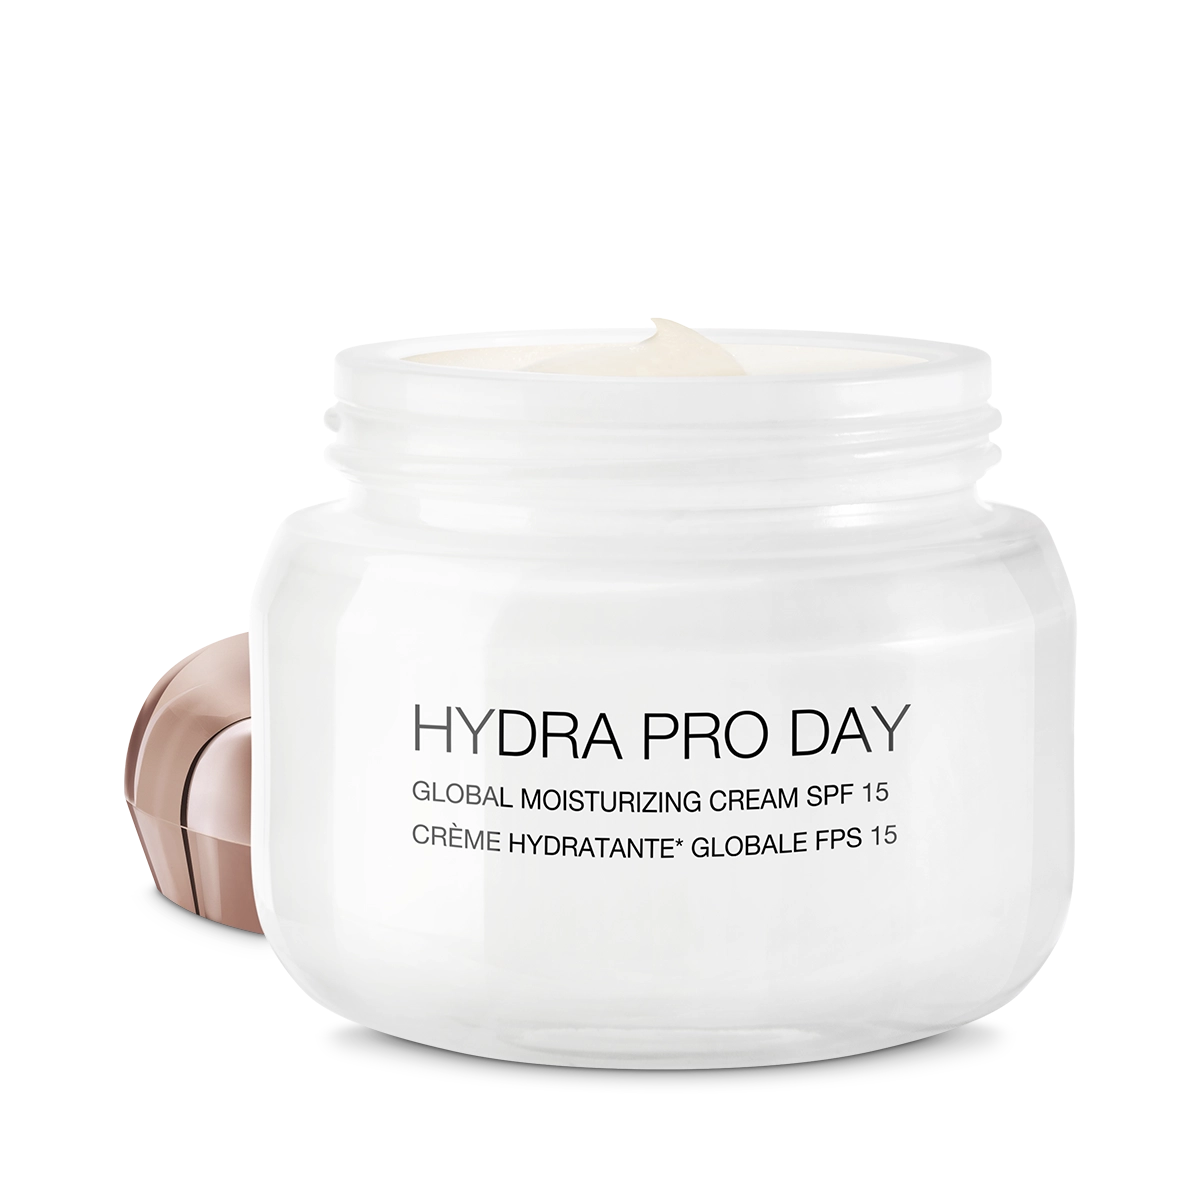 Hydra Pro Day